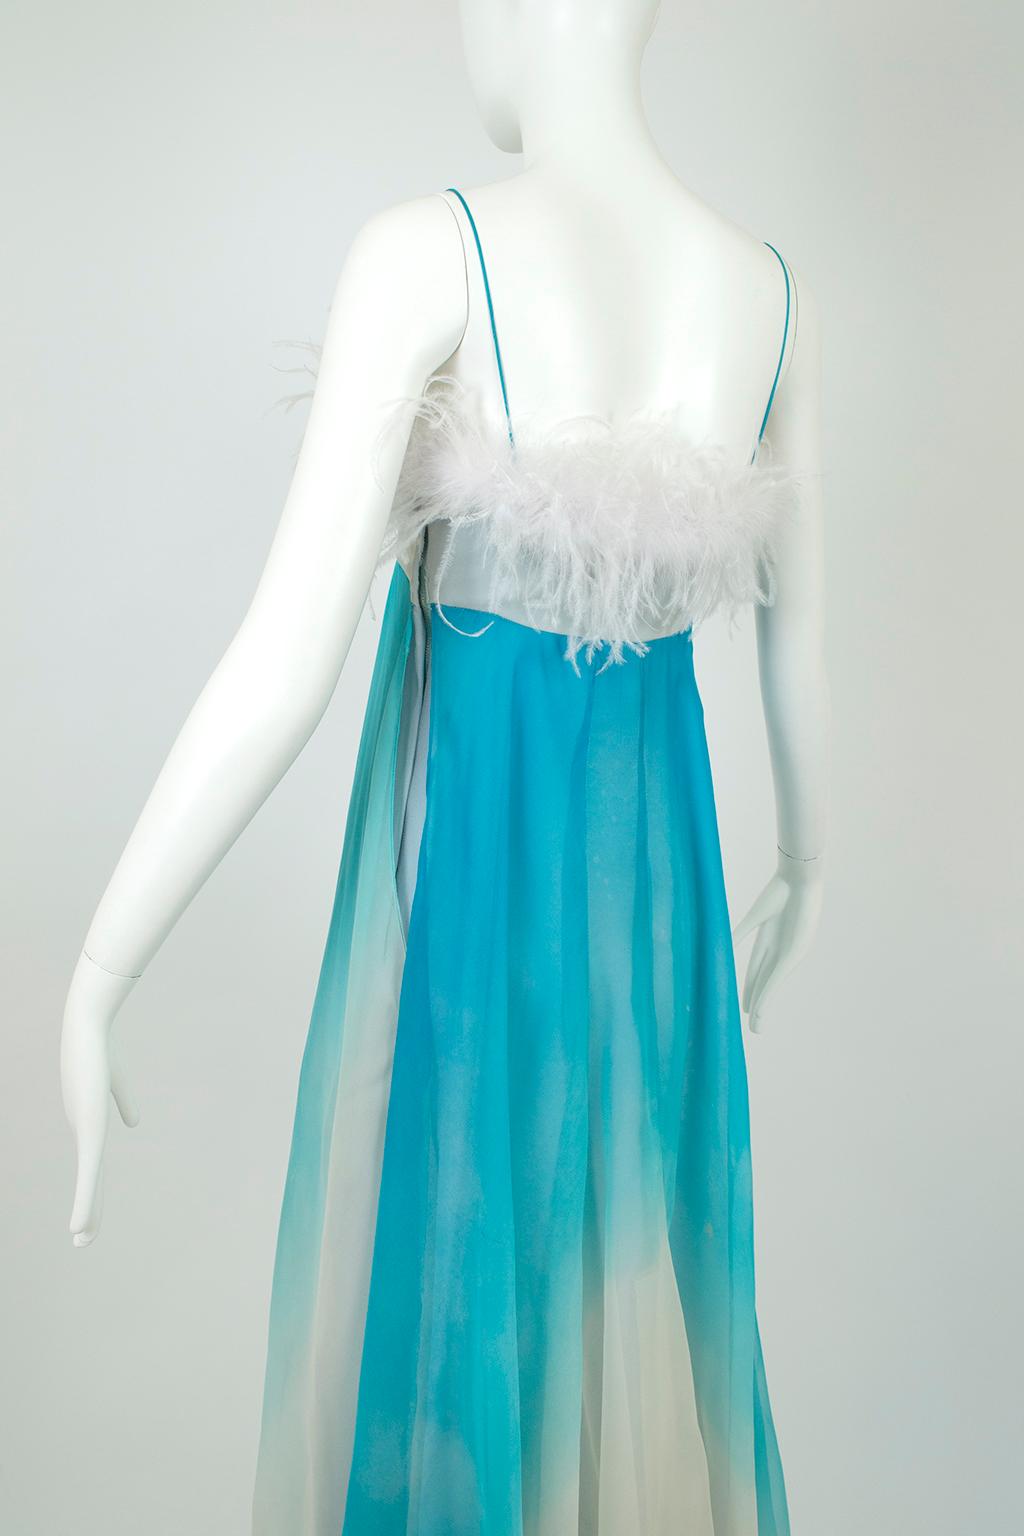 Women's Aqua Ombré Tie Dye Chiffon Ball Gown with Ostrich Feather Trim – XS, 1960s For Sale